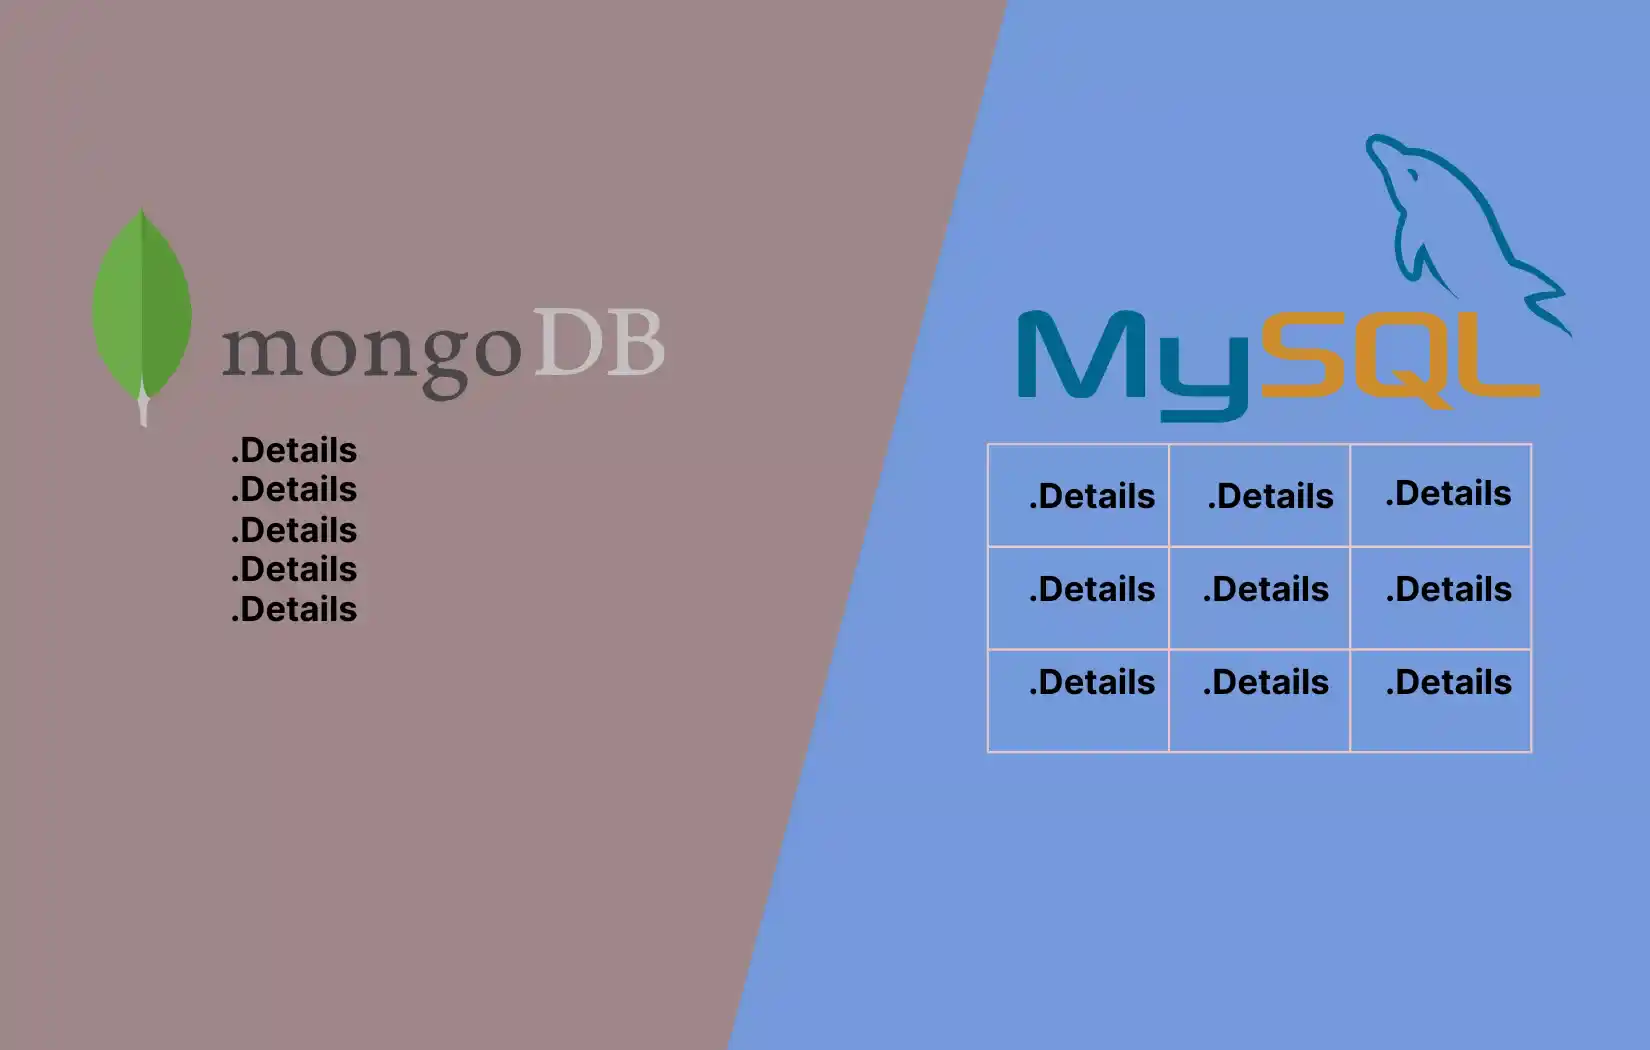 MongoDB and MySQL data storage format